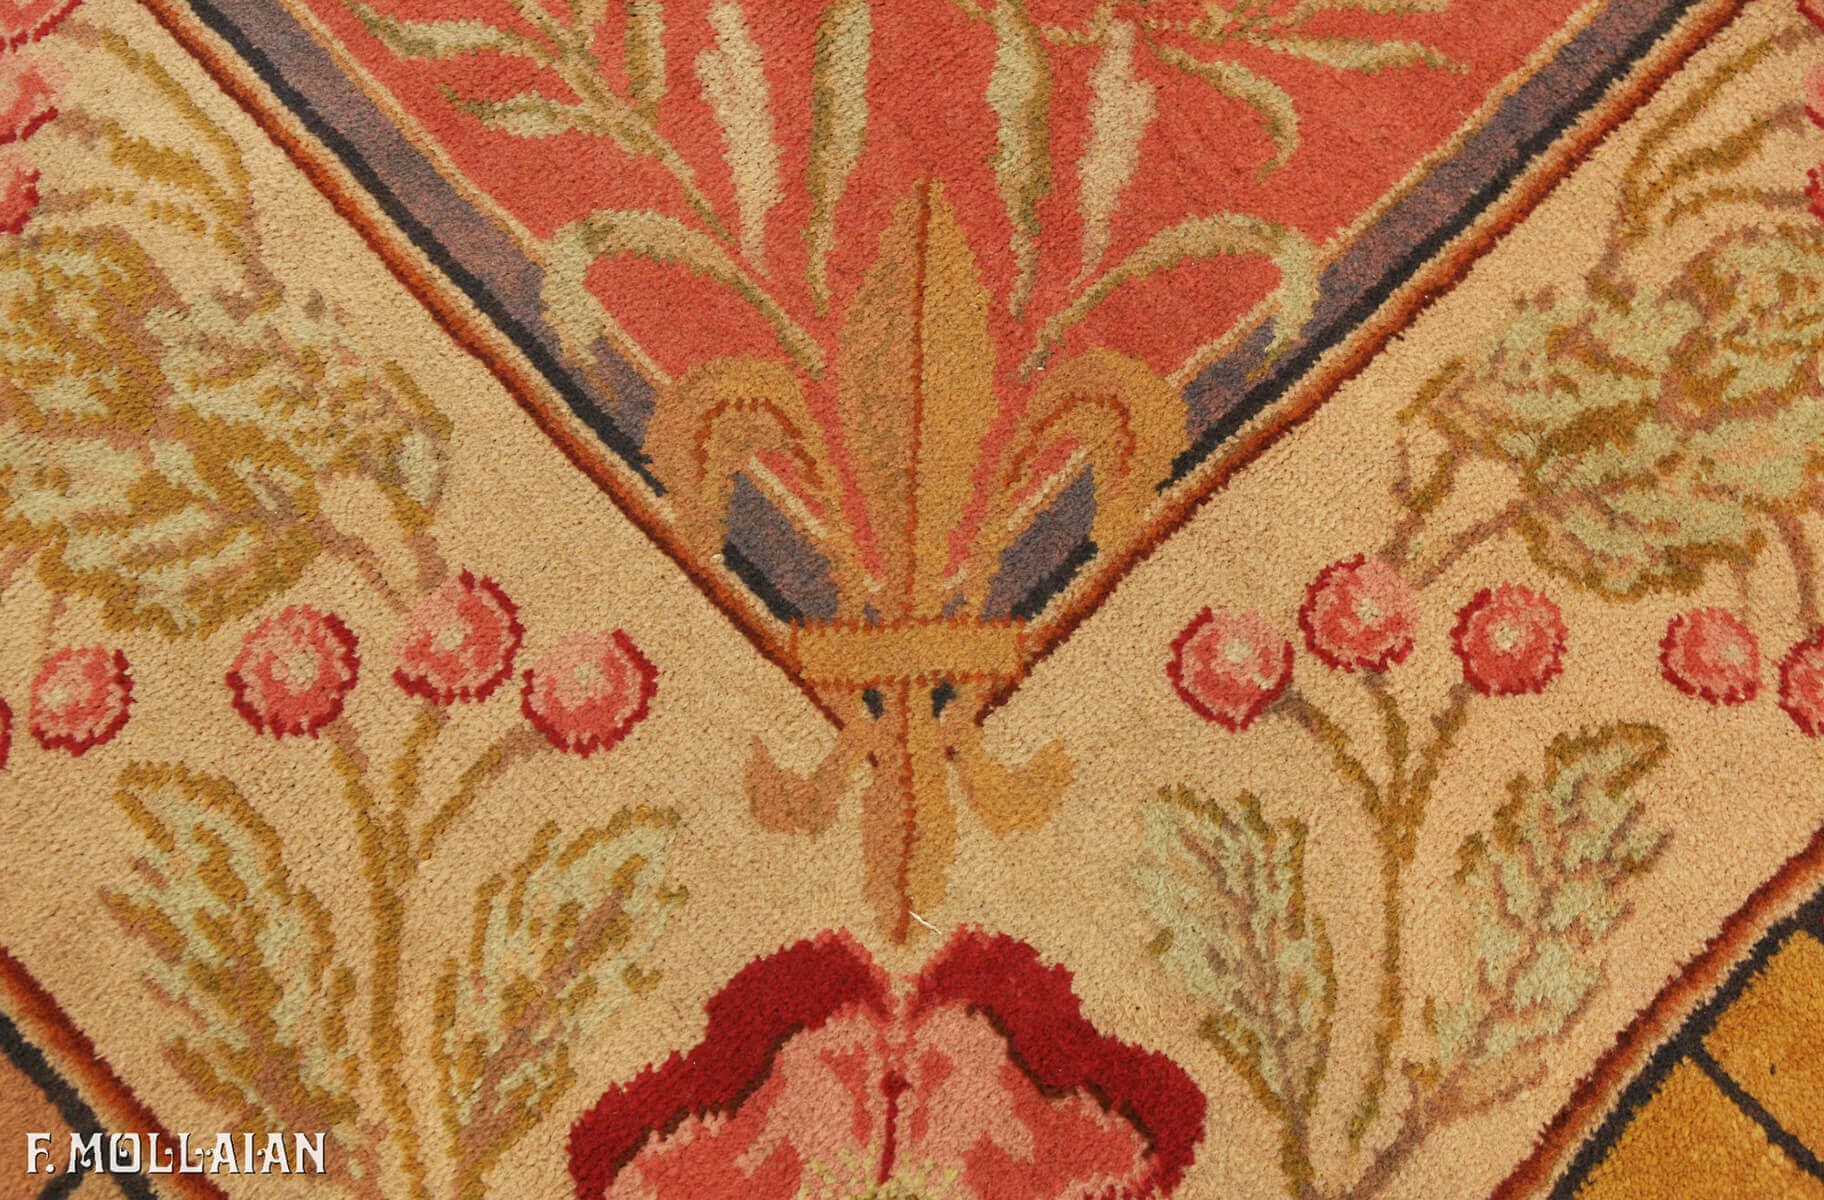 Teppich Semi-Antiker Europäischer n°:39938200